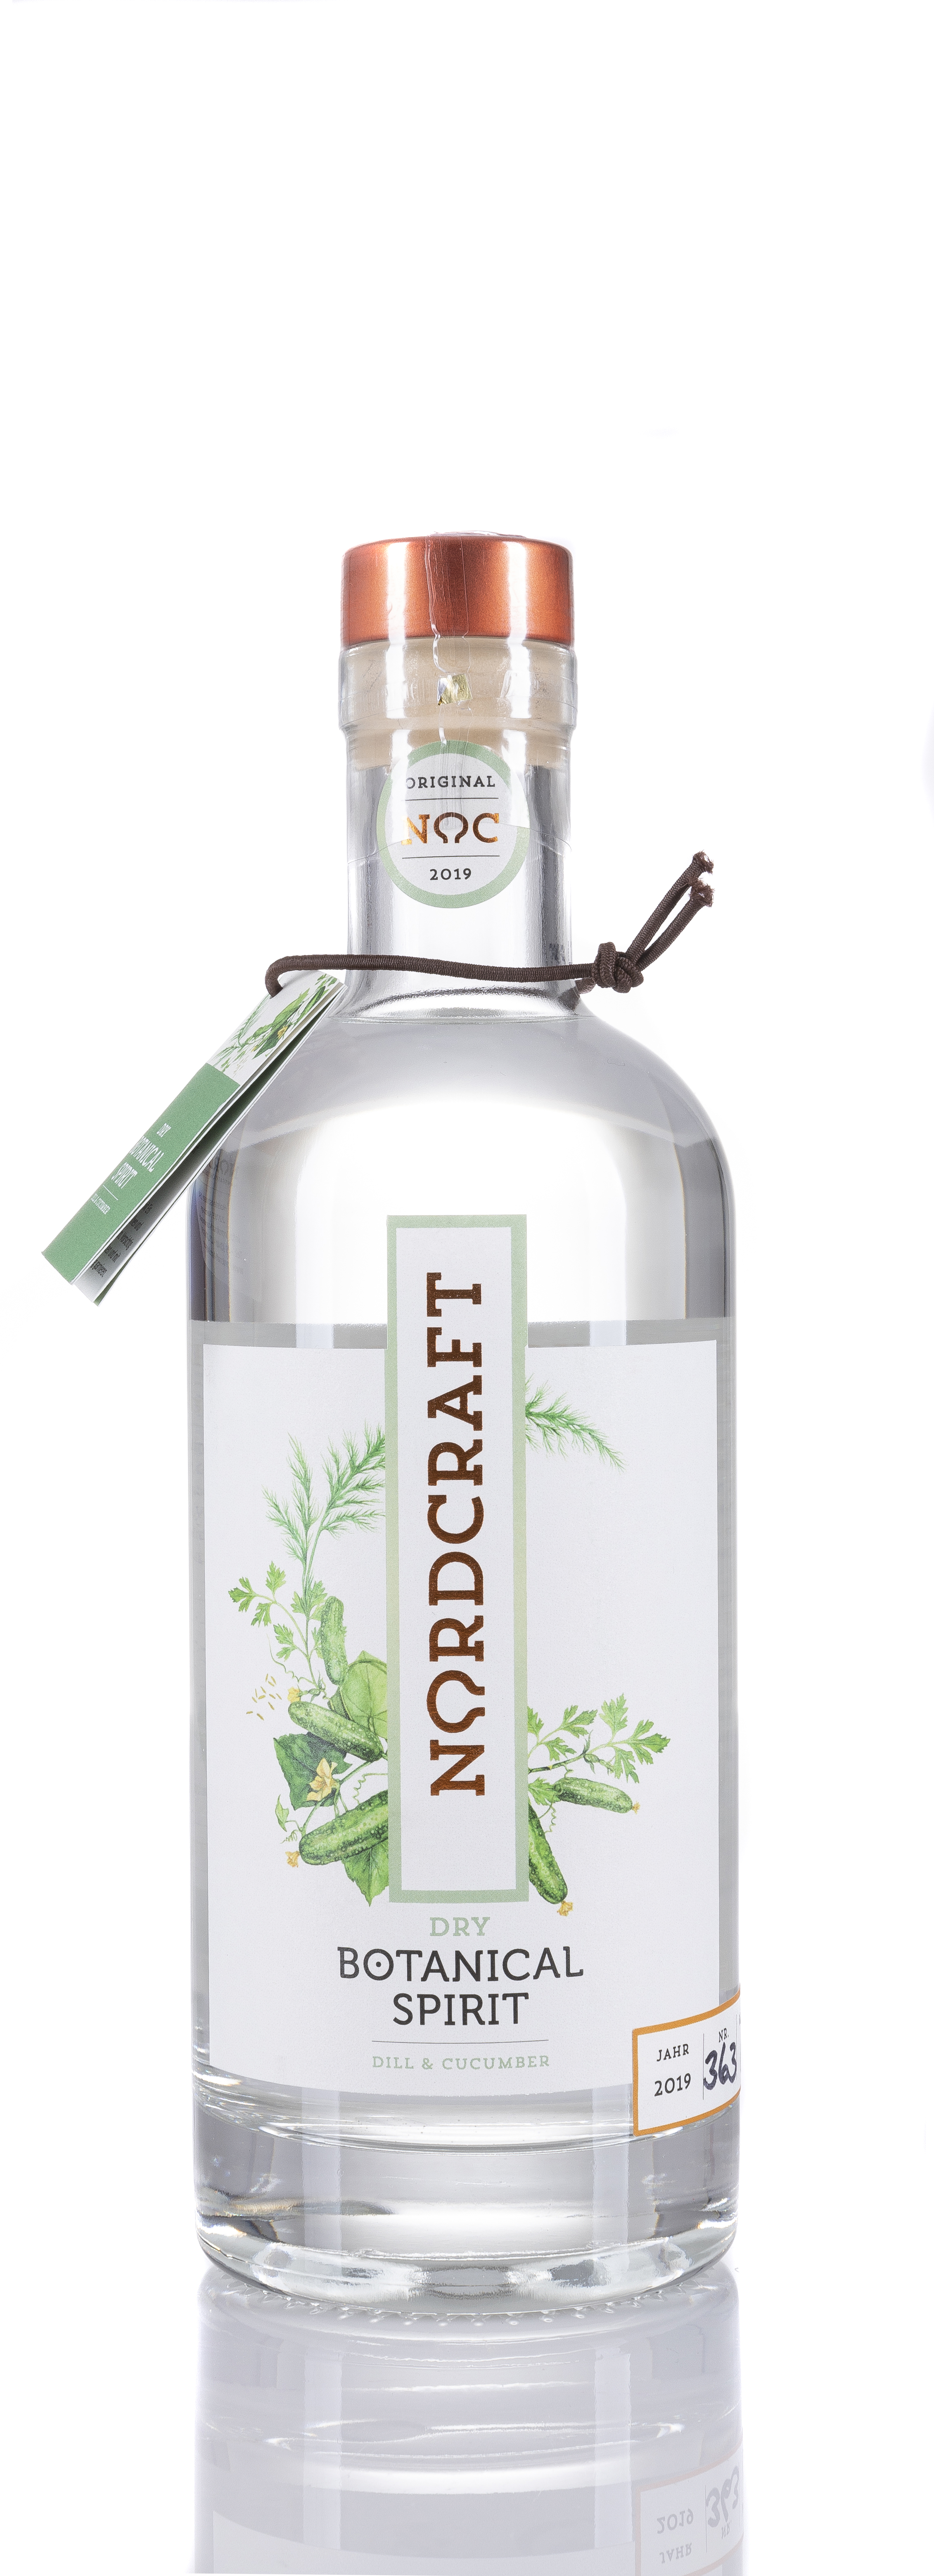 Nordcraft - Dry botanical spirit Dill & Gurke